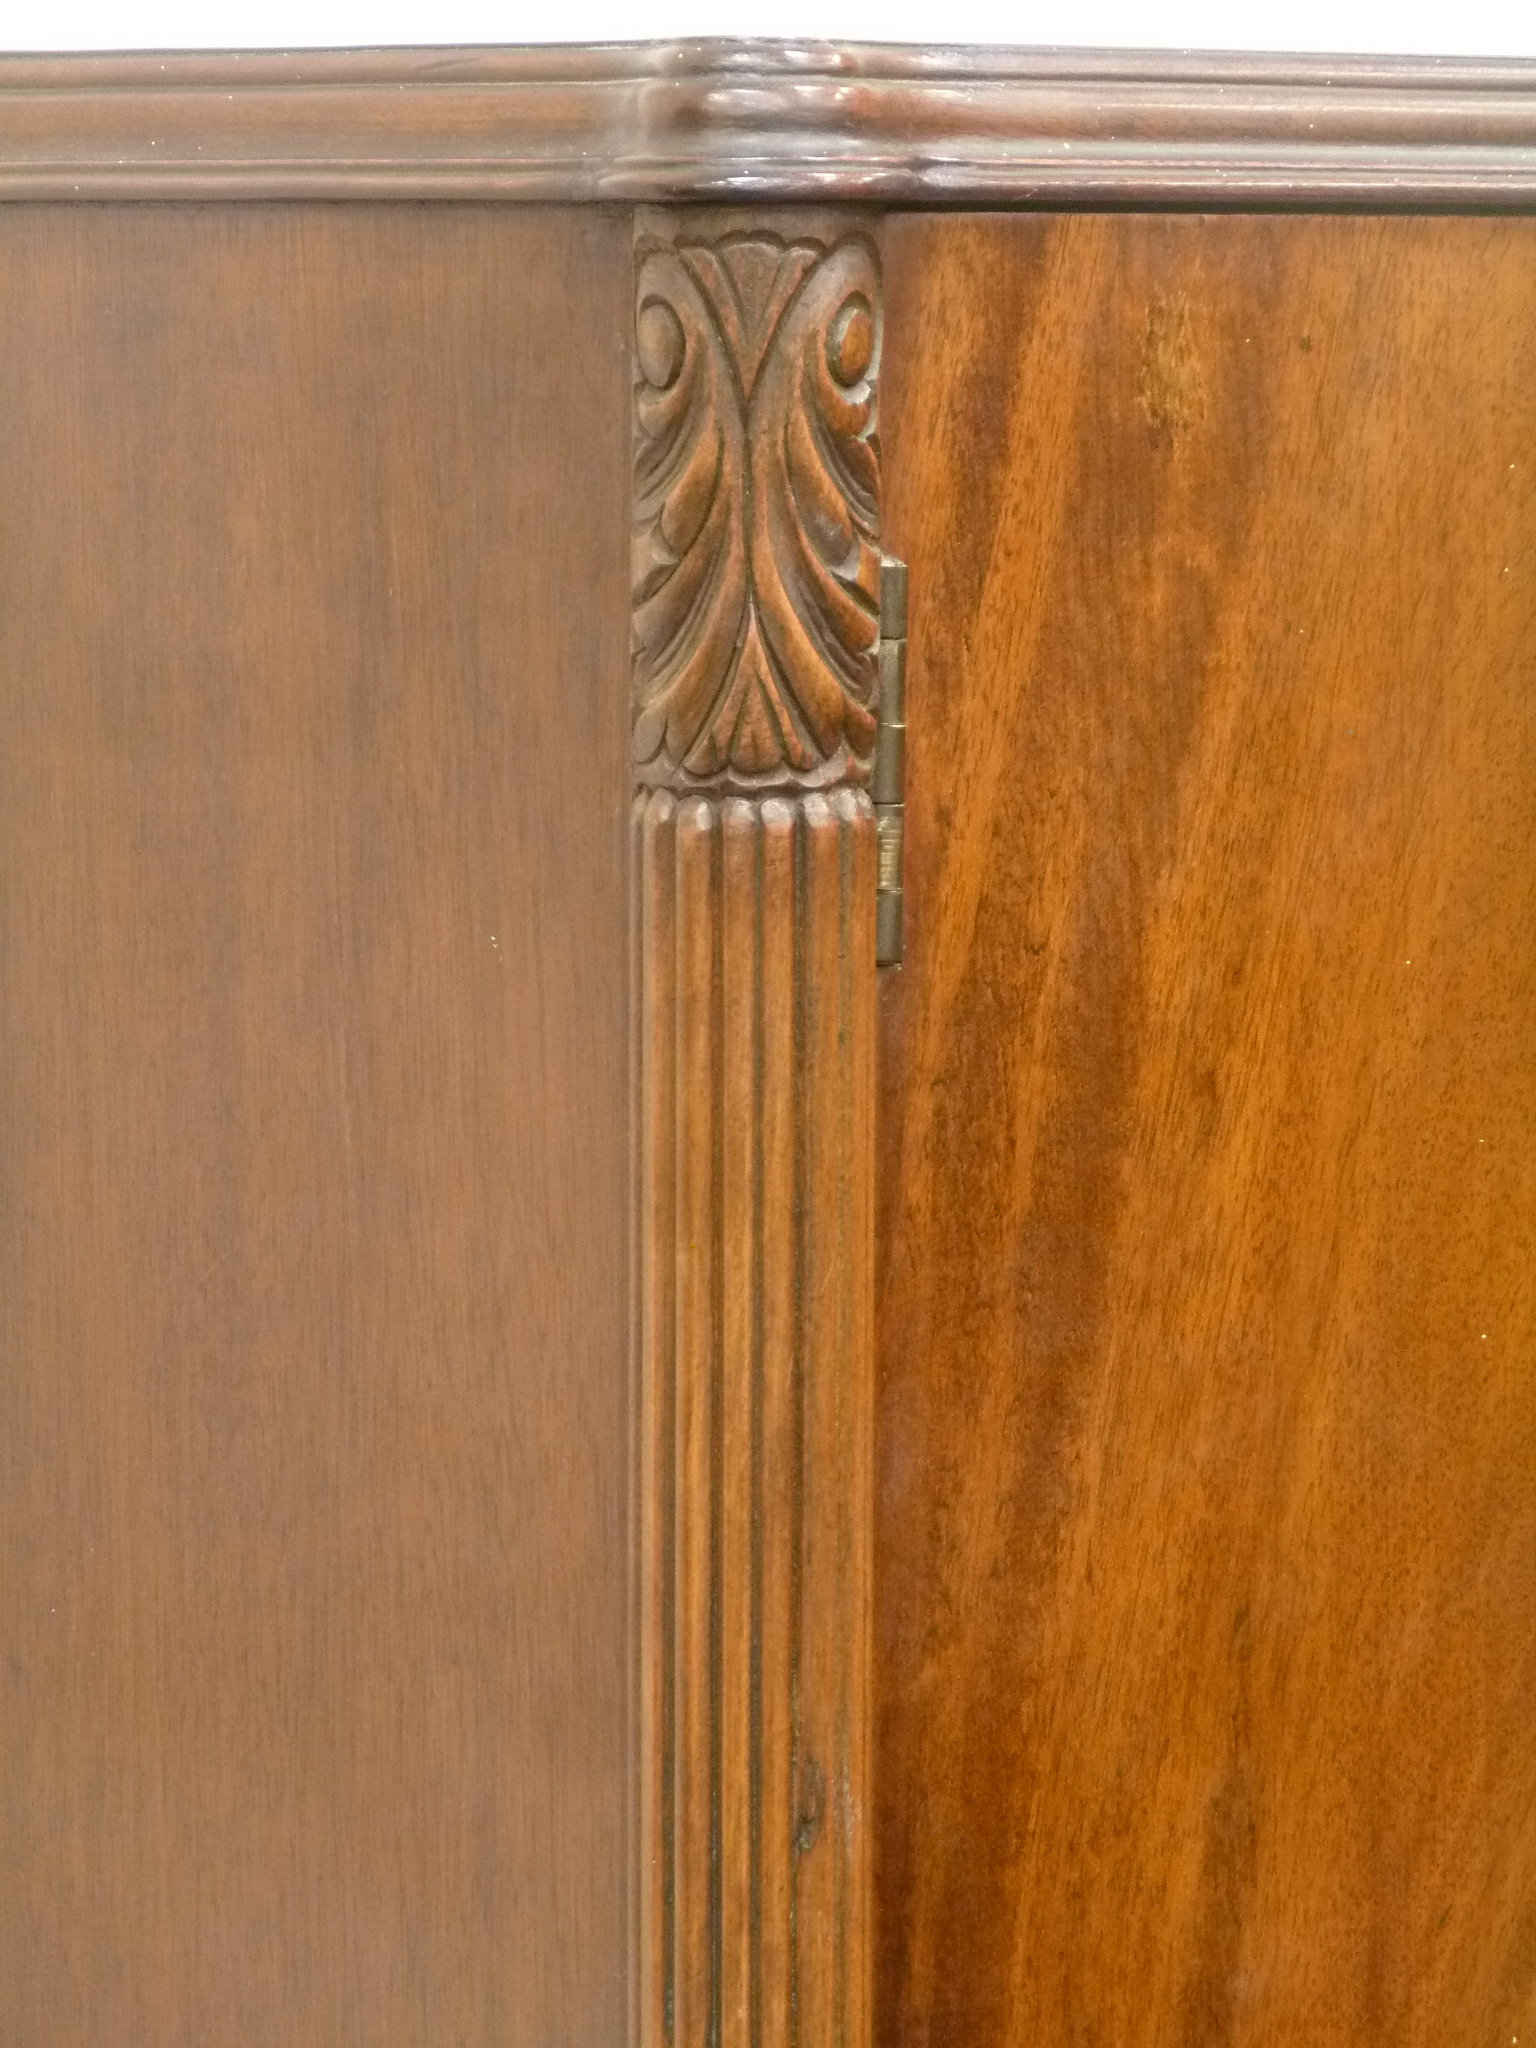 Early 20th century mahogany tallboy, W91cm, H150cm - Image 2 of 2